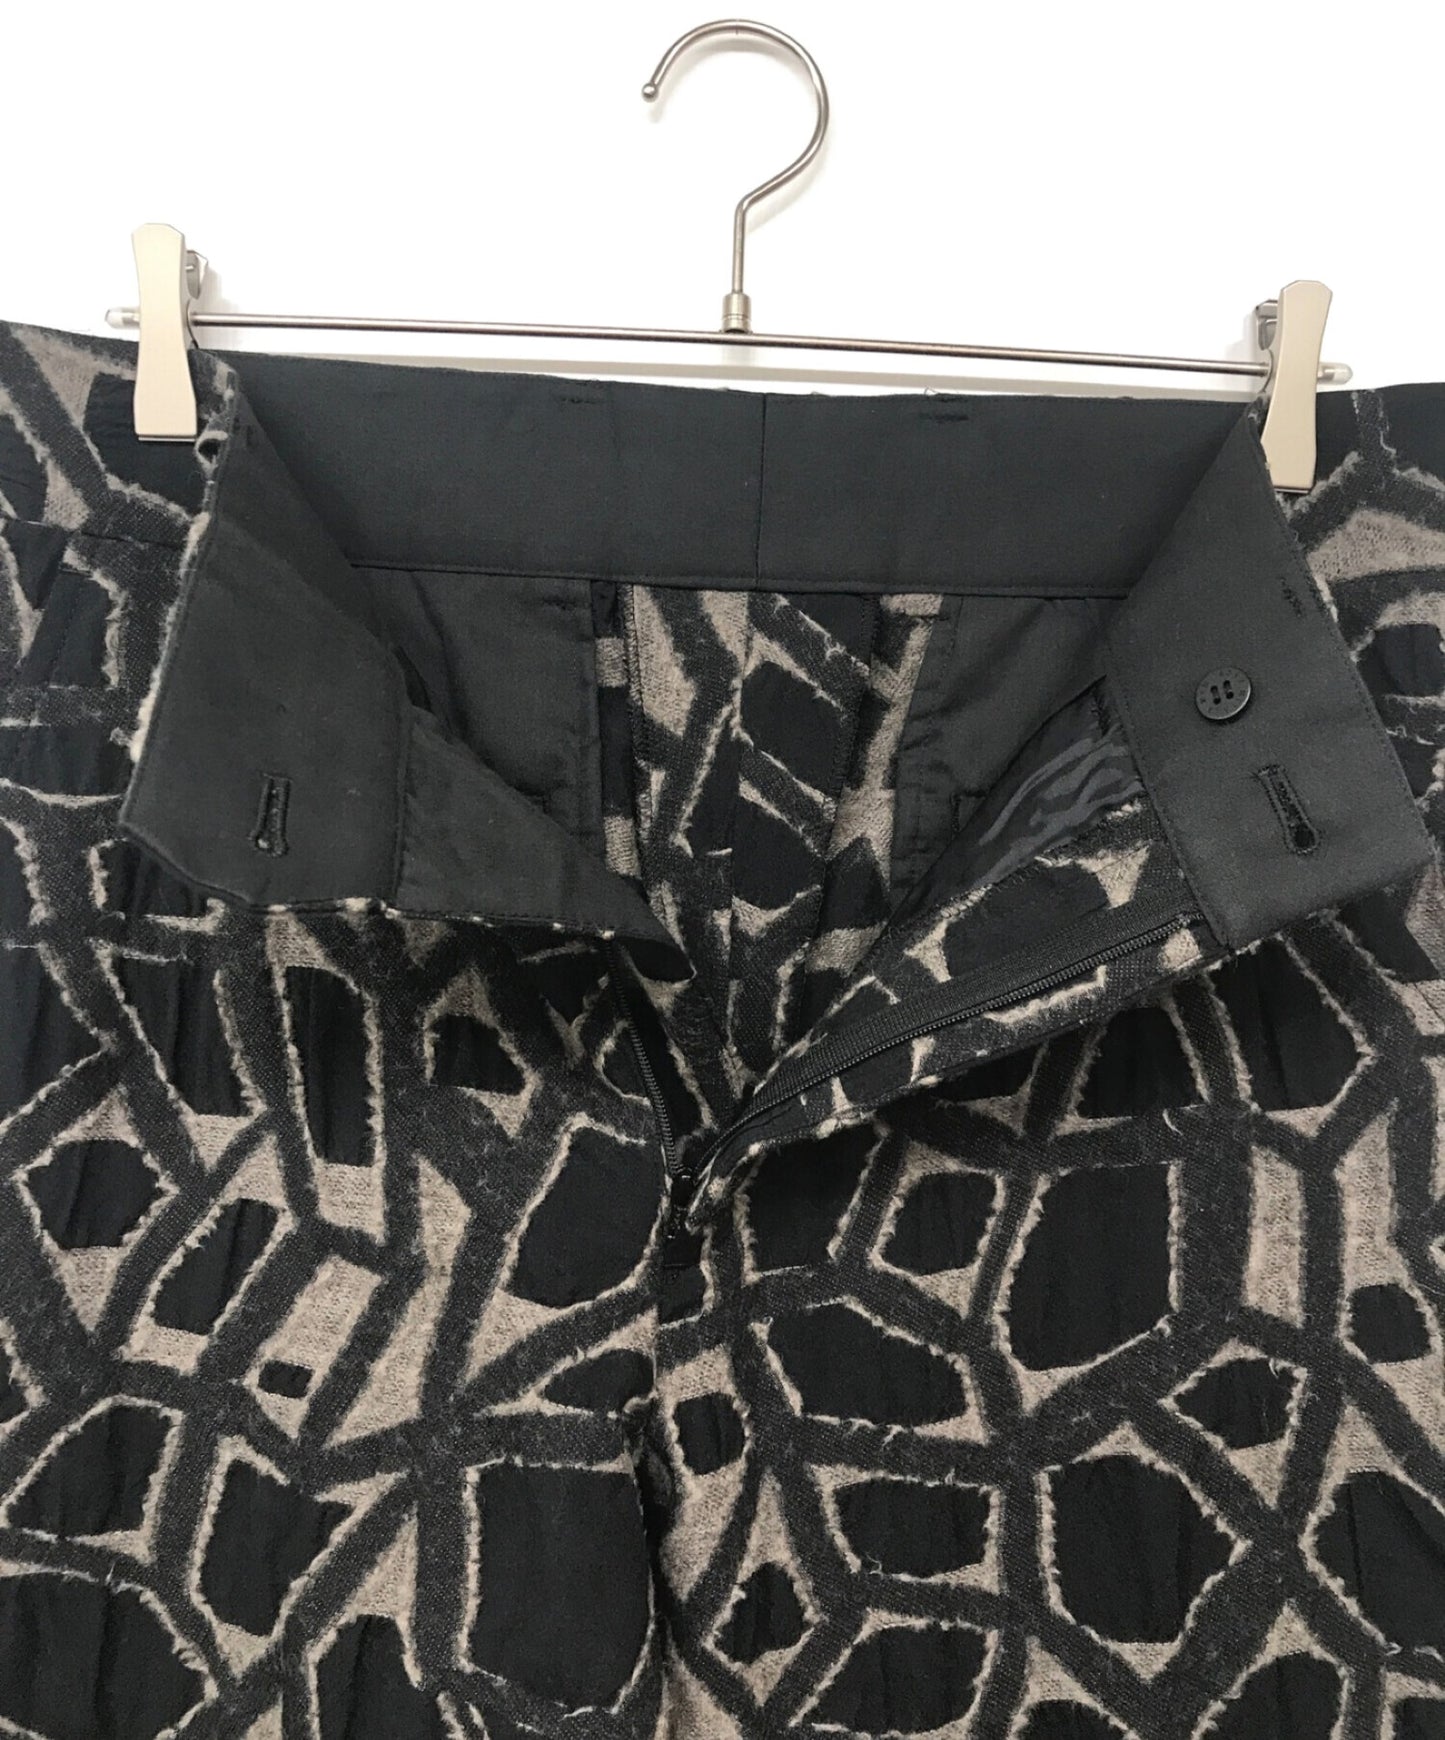 [Pre-owned] ISSEY MIYAKE MEN Net-cut jacquard design tapered pants ME81FF238